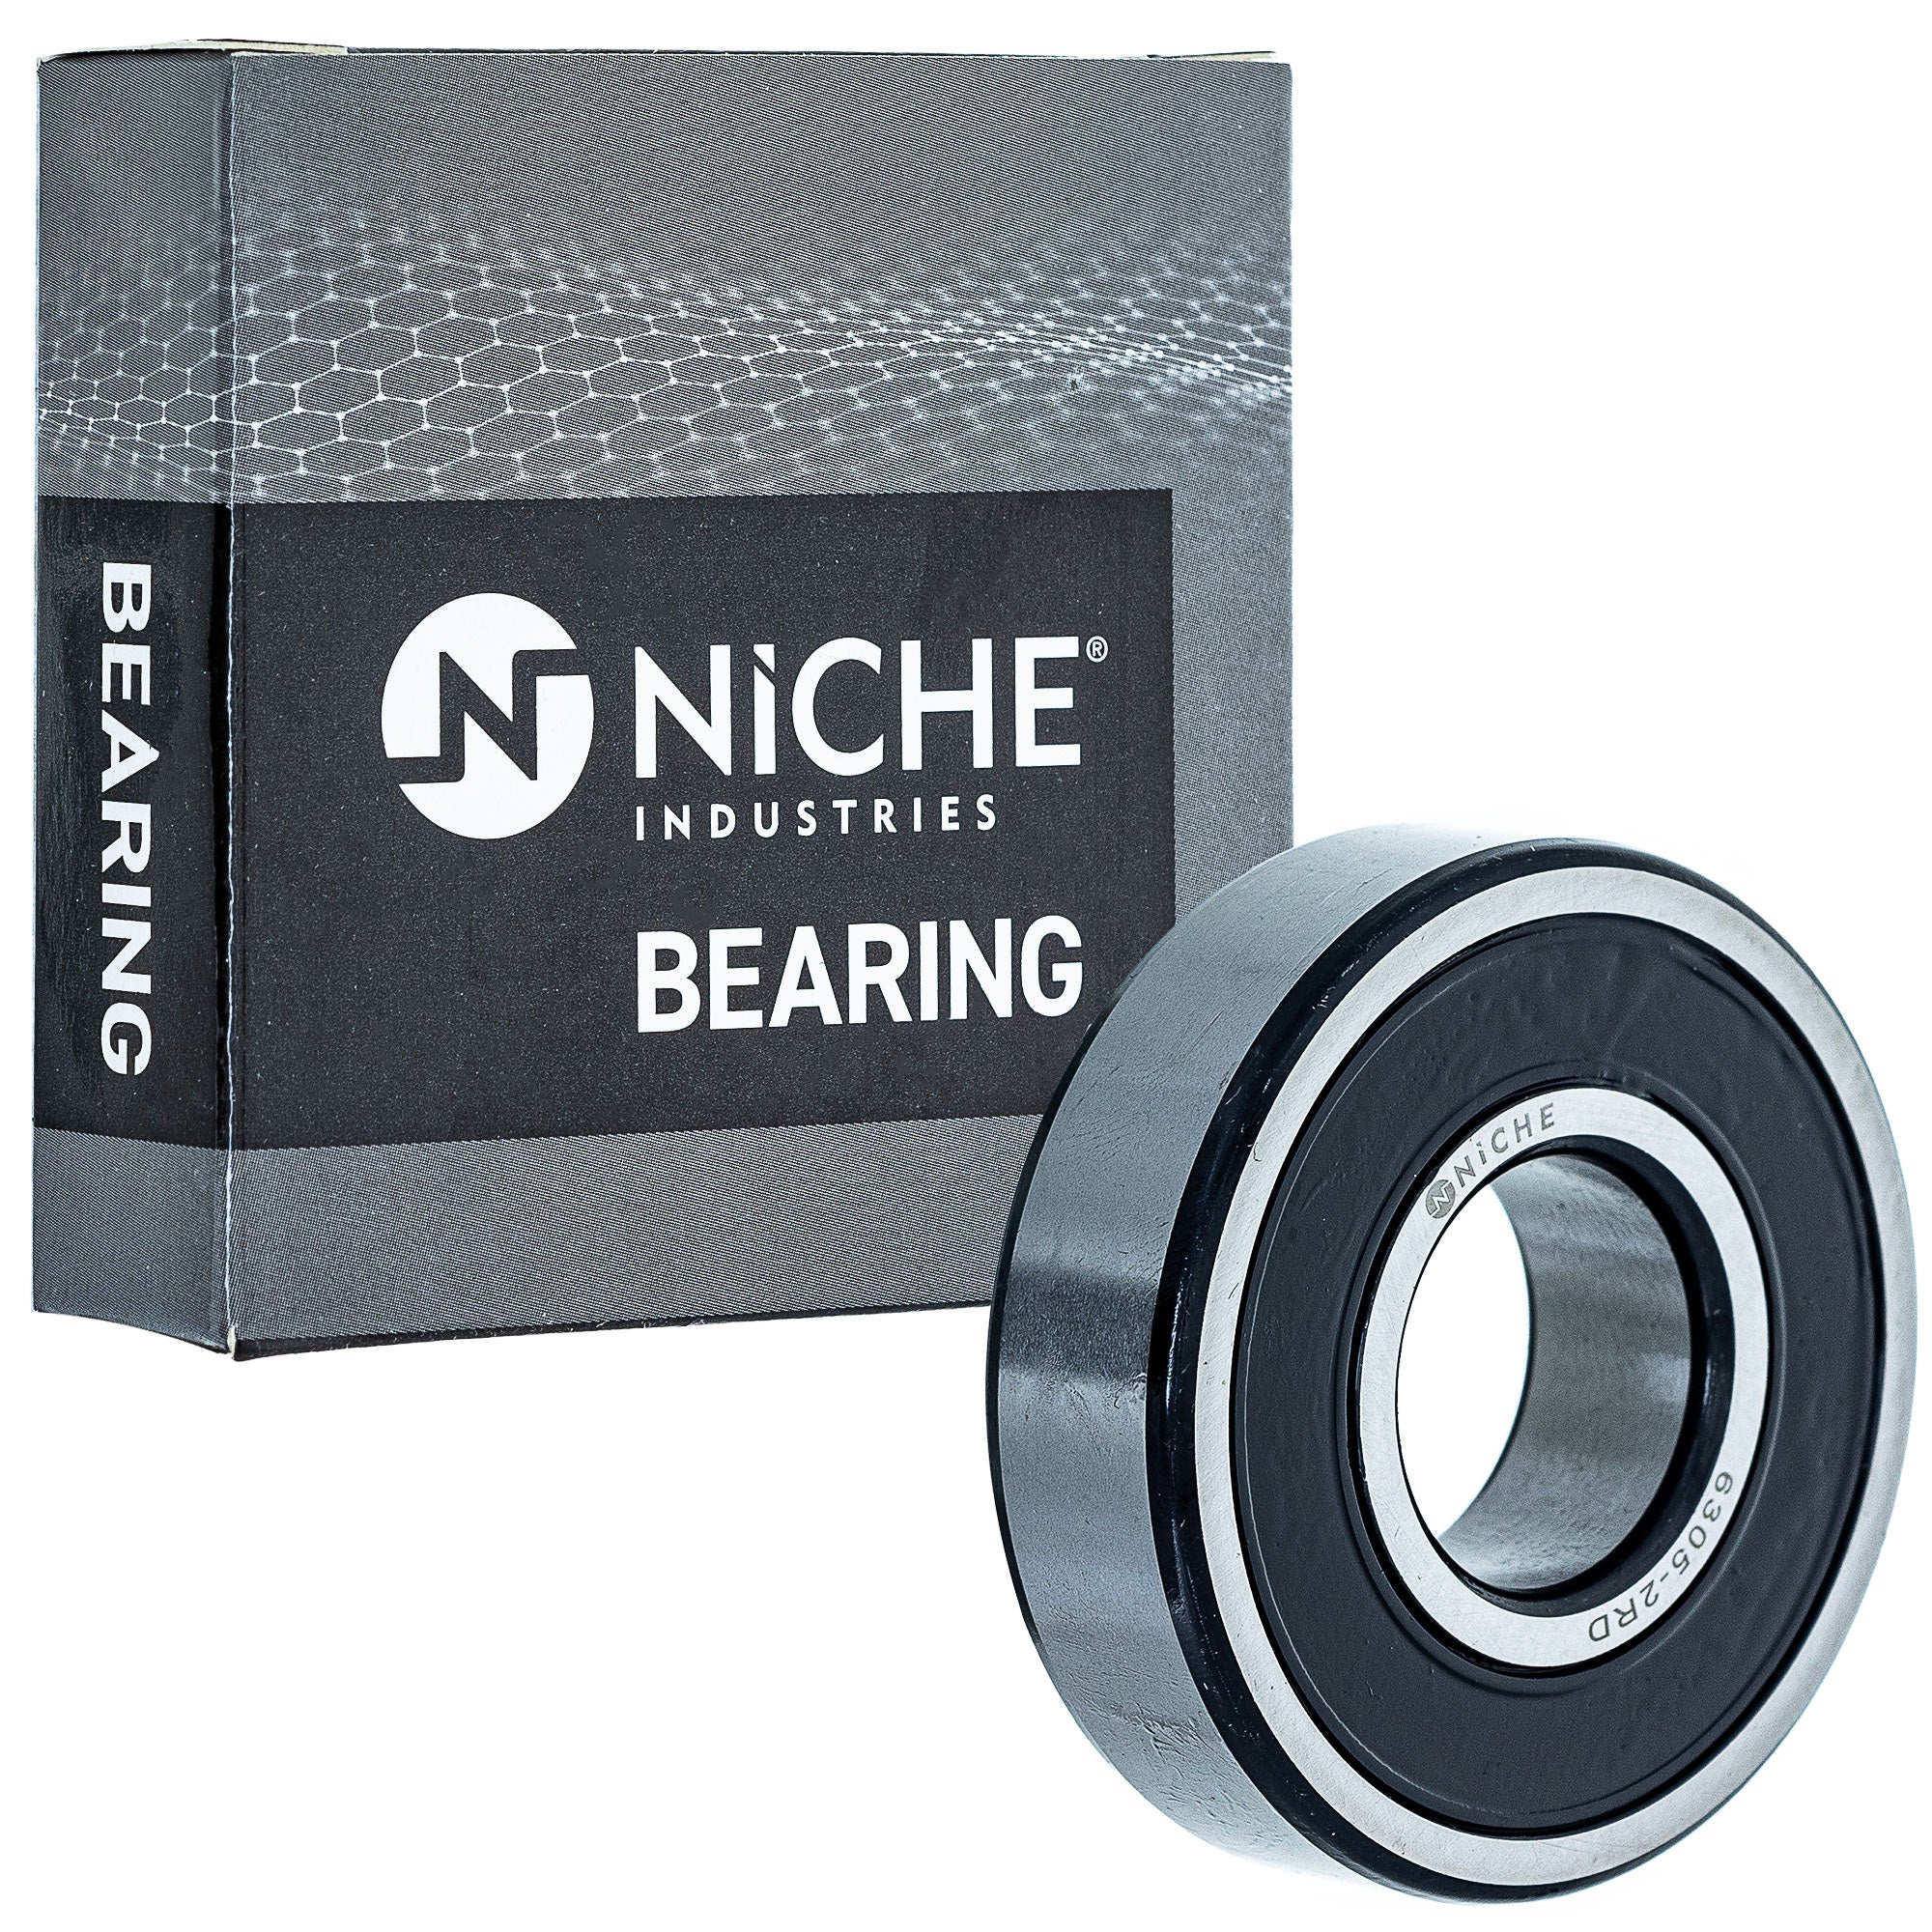 NICHE 519-CBB2290R Bearing 2-Pack for zOTHER XR650R XR200 XR185 XL350